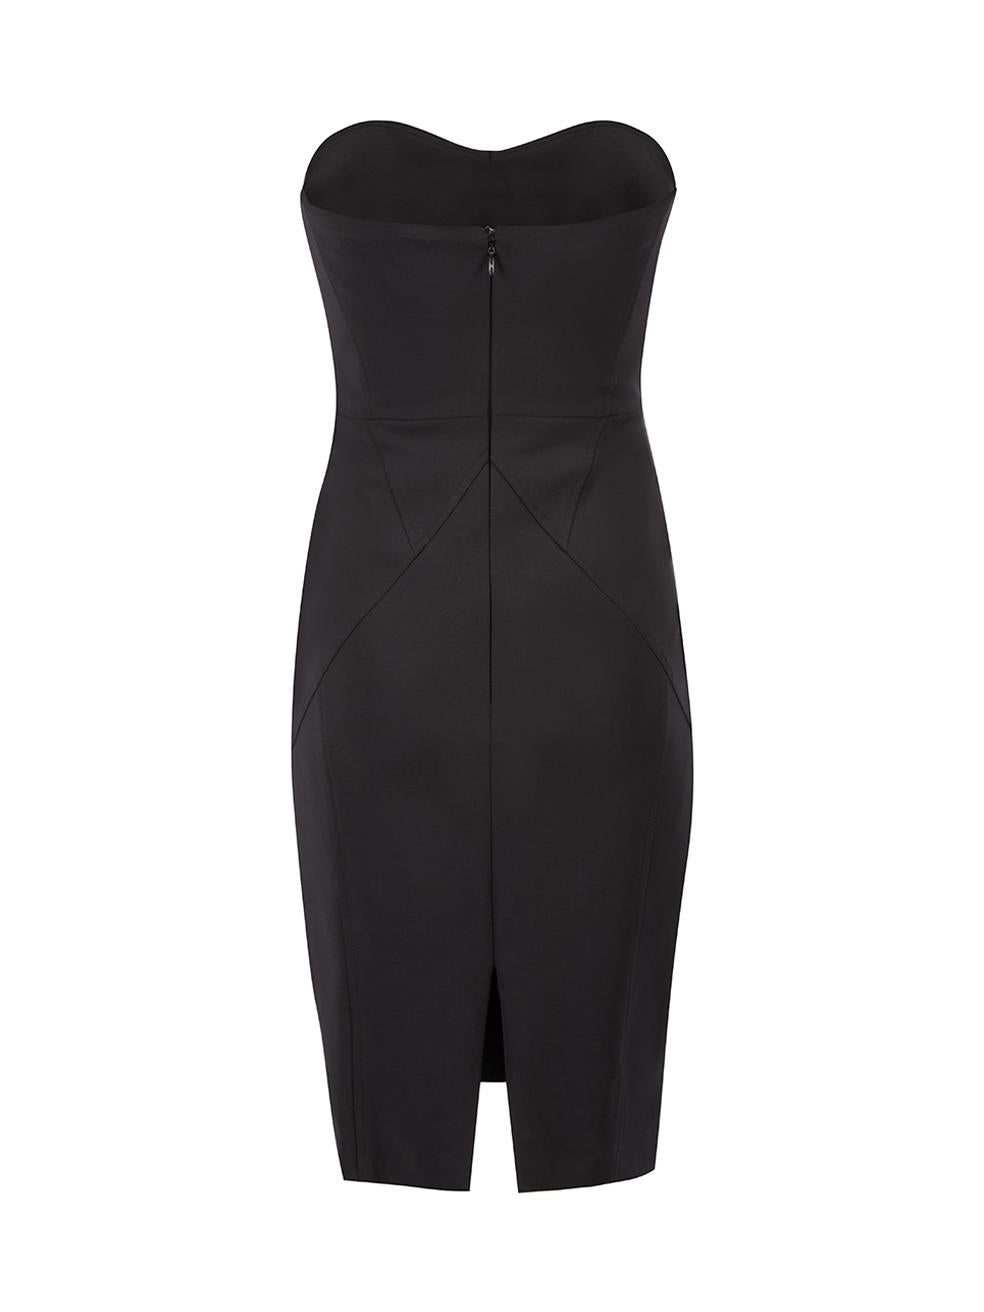 Black Abito Belt Mini Dress Size S In Good Condition In London, GB